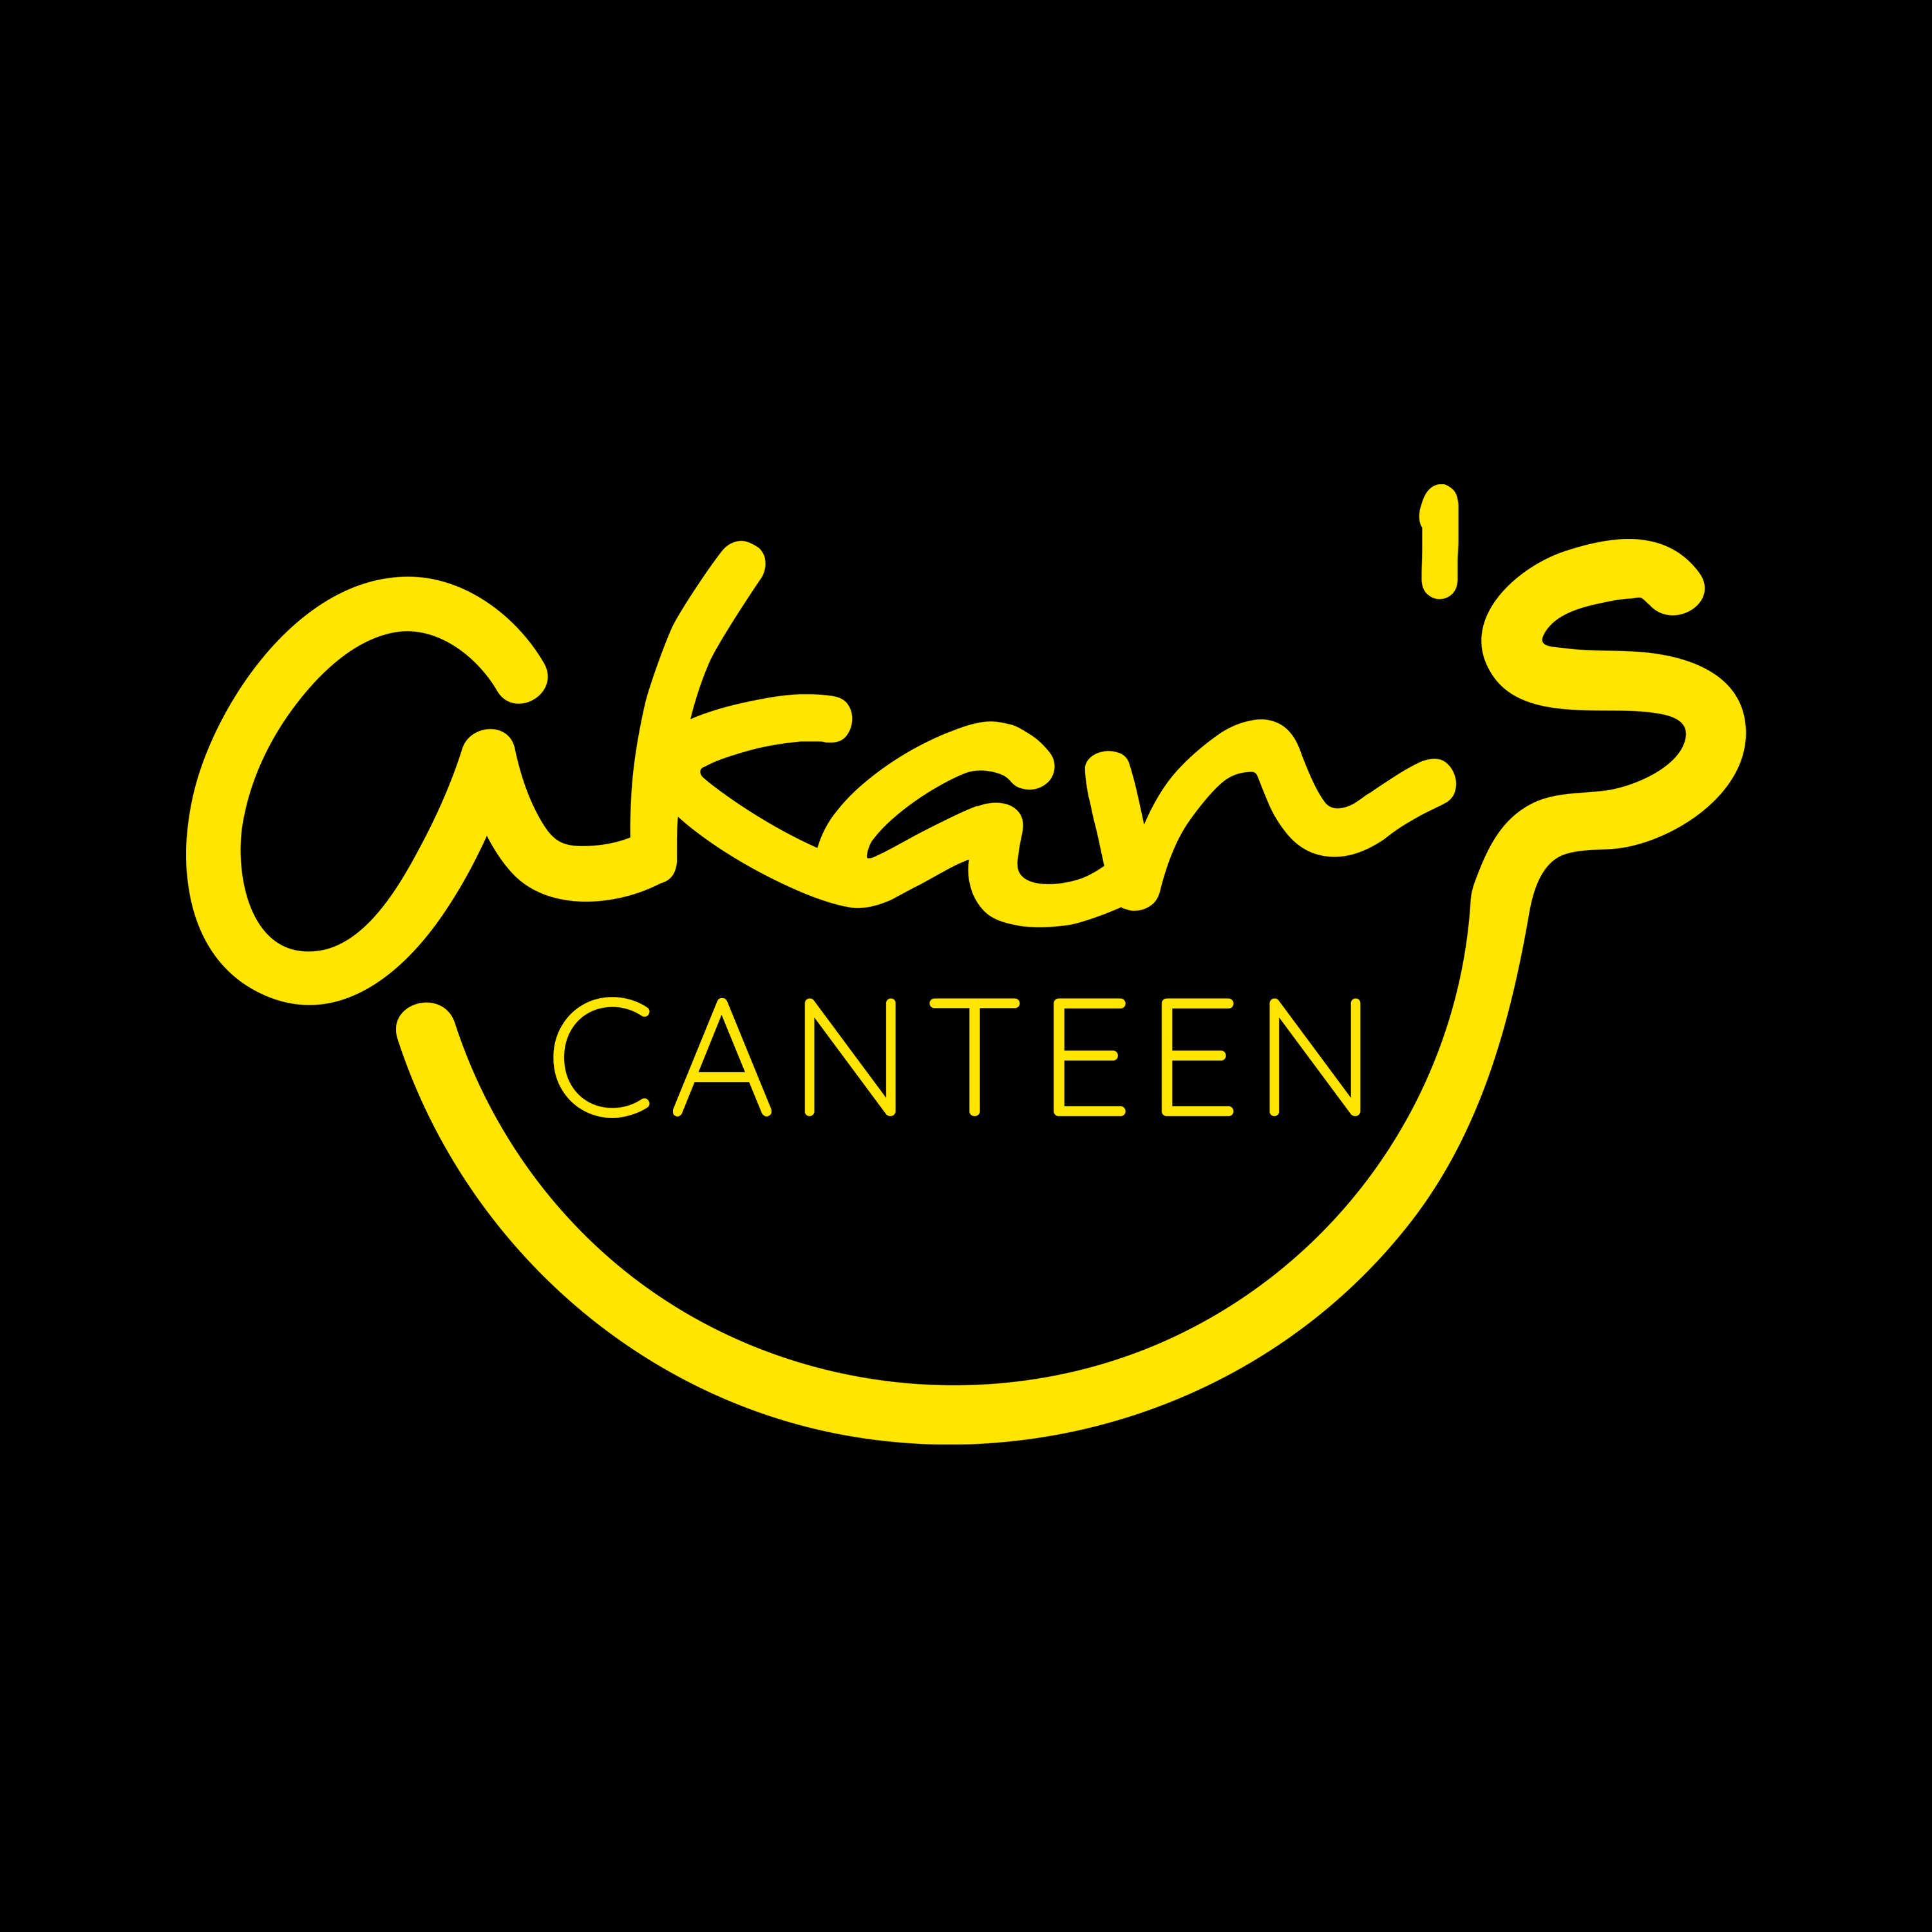 Akan's